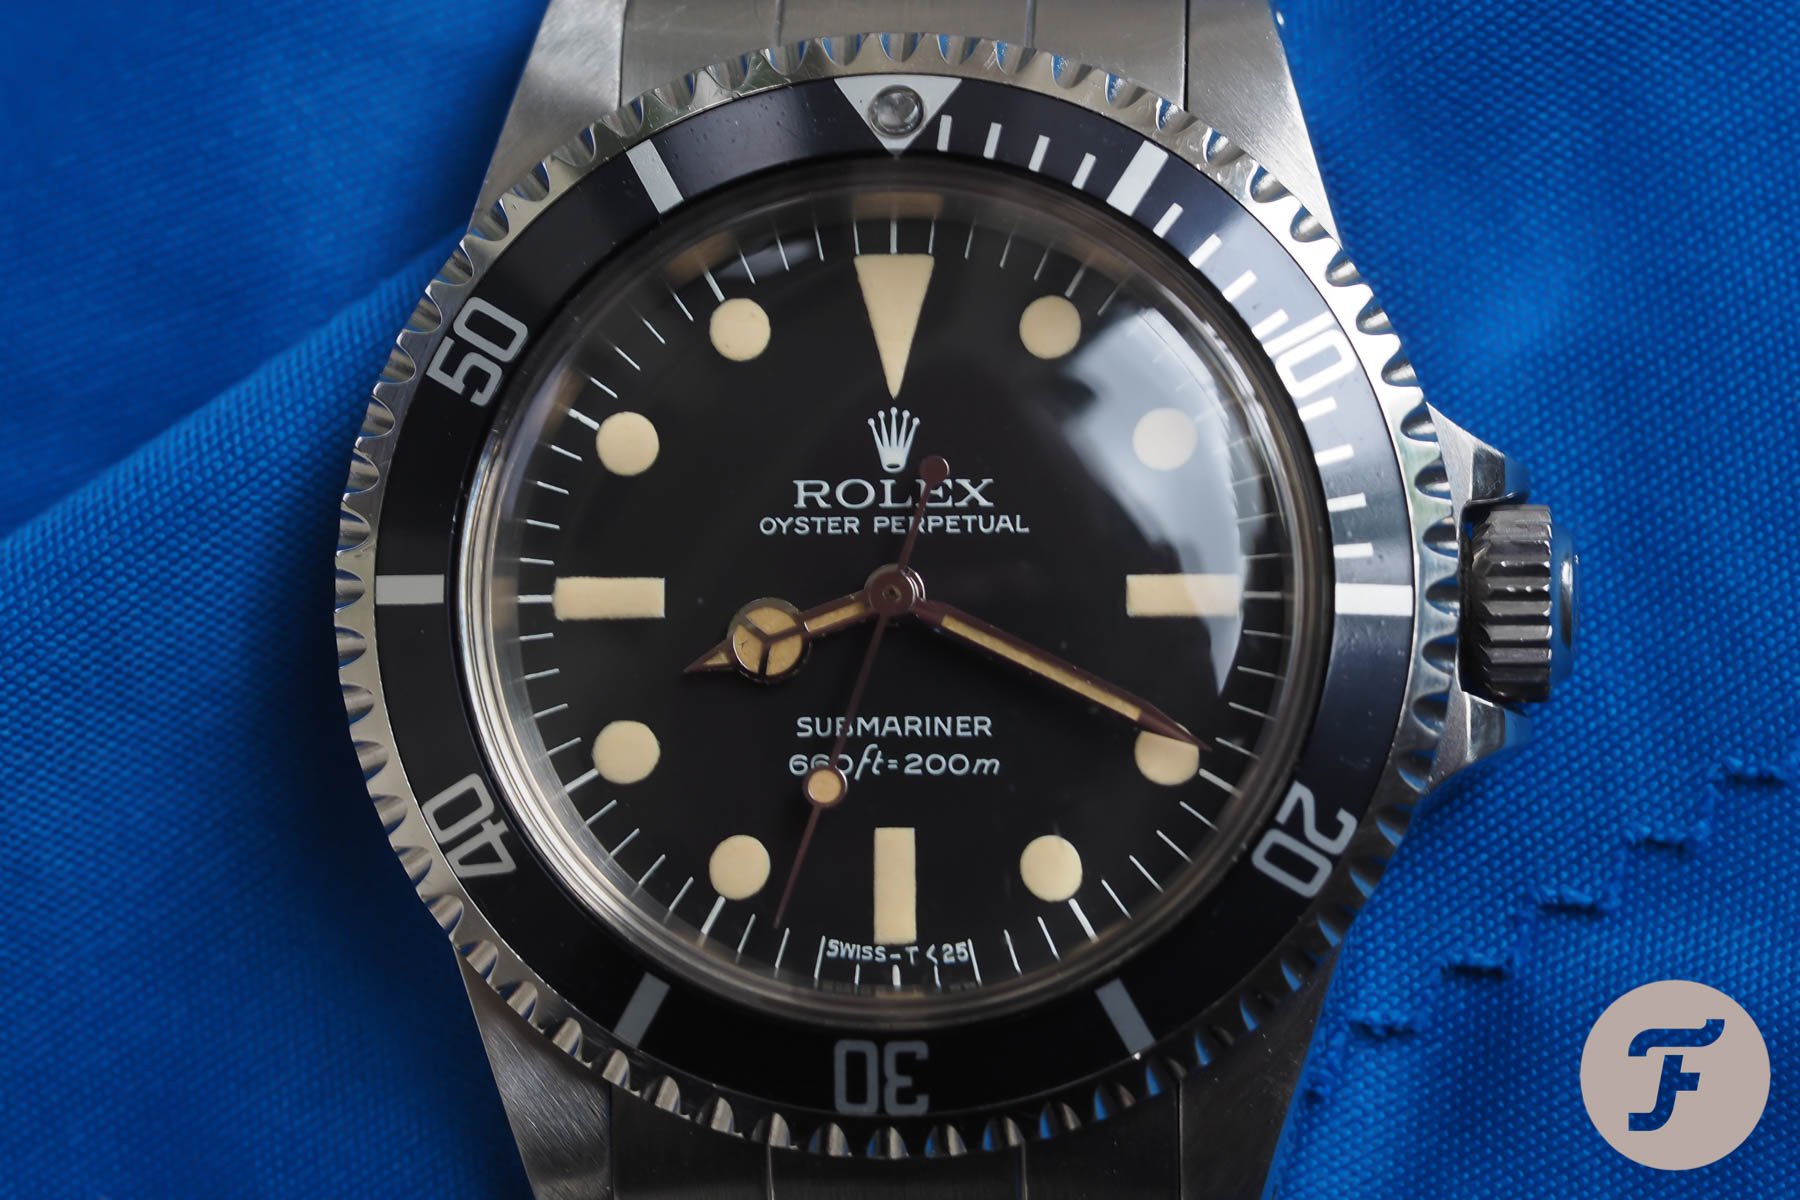 Submariner LV, MK1 MK2 side by side Pics - Page 6 - Rolex Forums - Rolex  Watch Forum